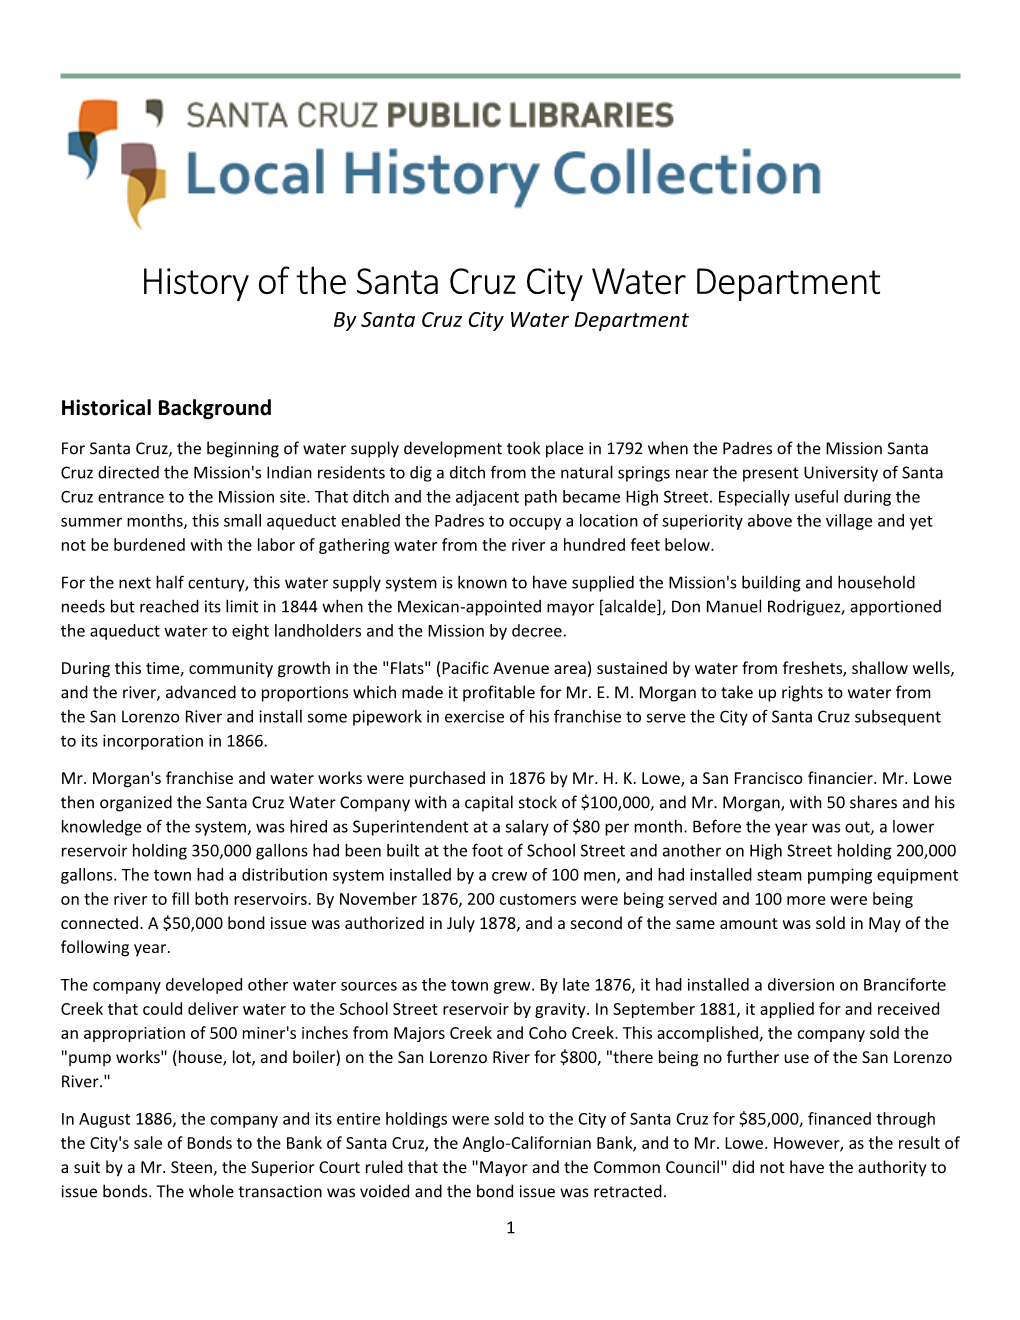 History of the Santa Cruz City Water Department by Santa Cruz City Water Department